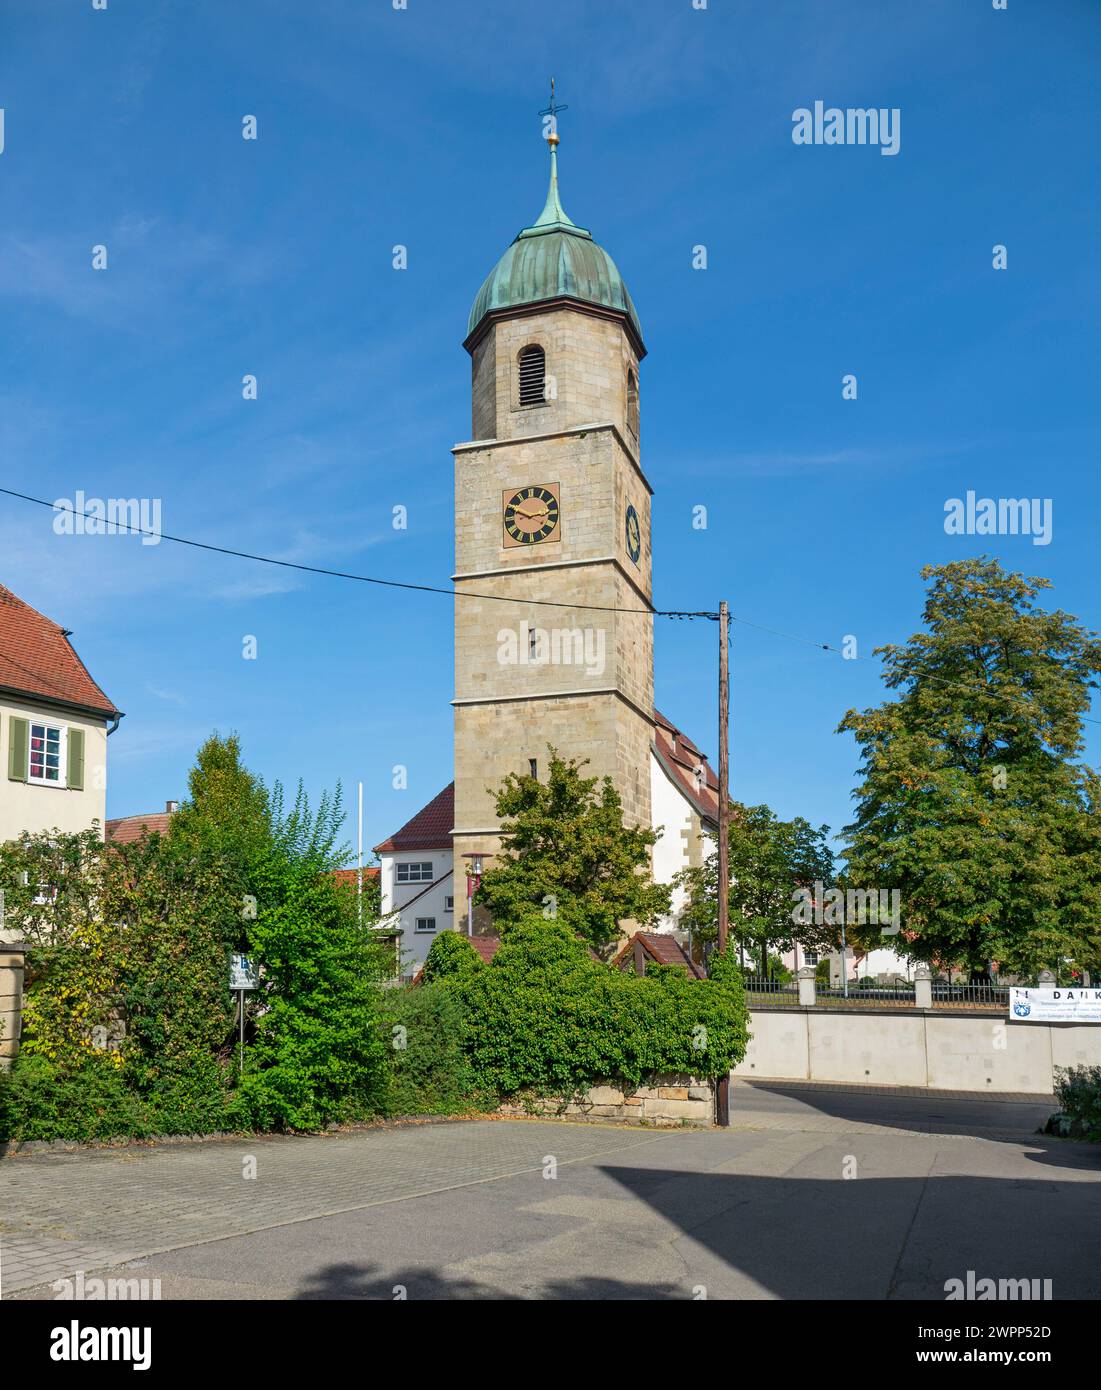 Filderstadt-Sielmingen, Evangelische St. Martins Kirche, Turm mit barockem Turm. Stockfoto